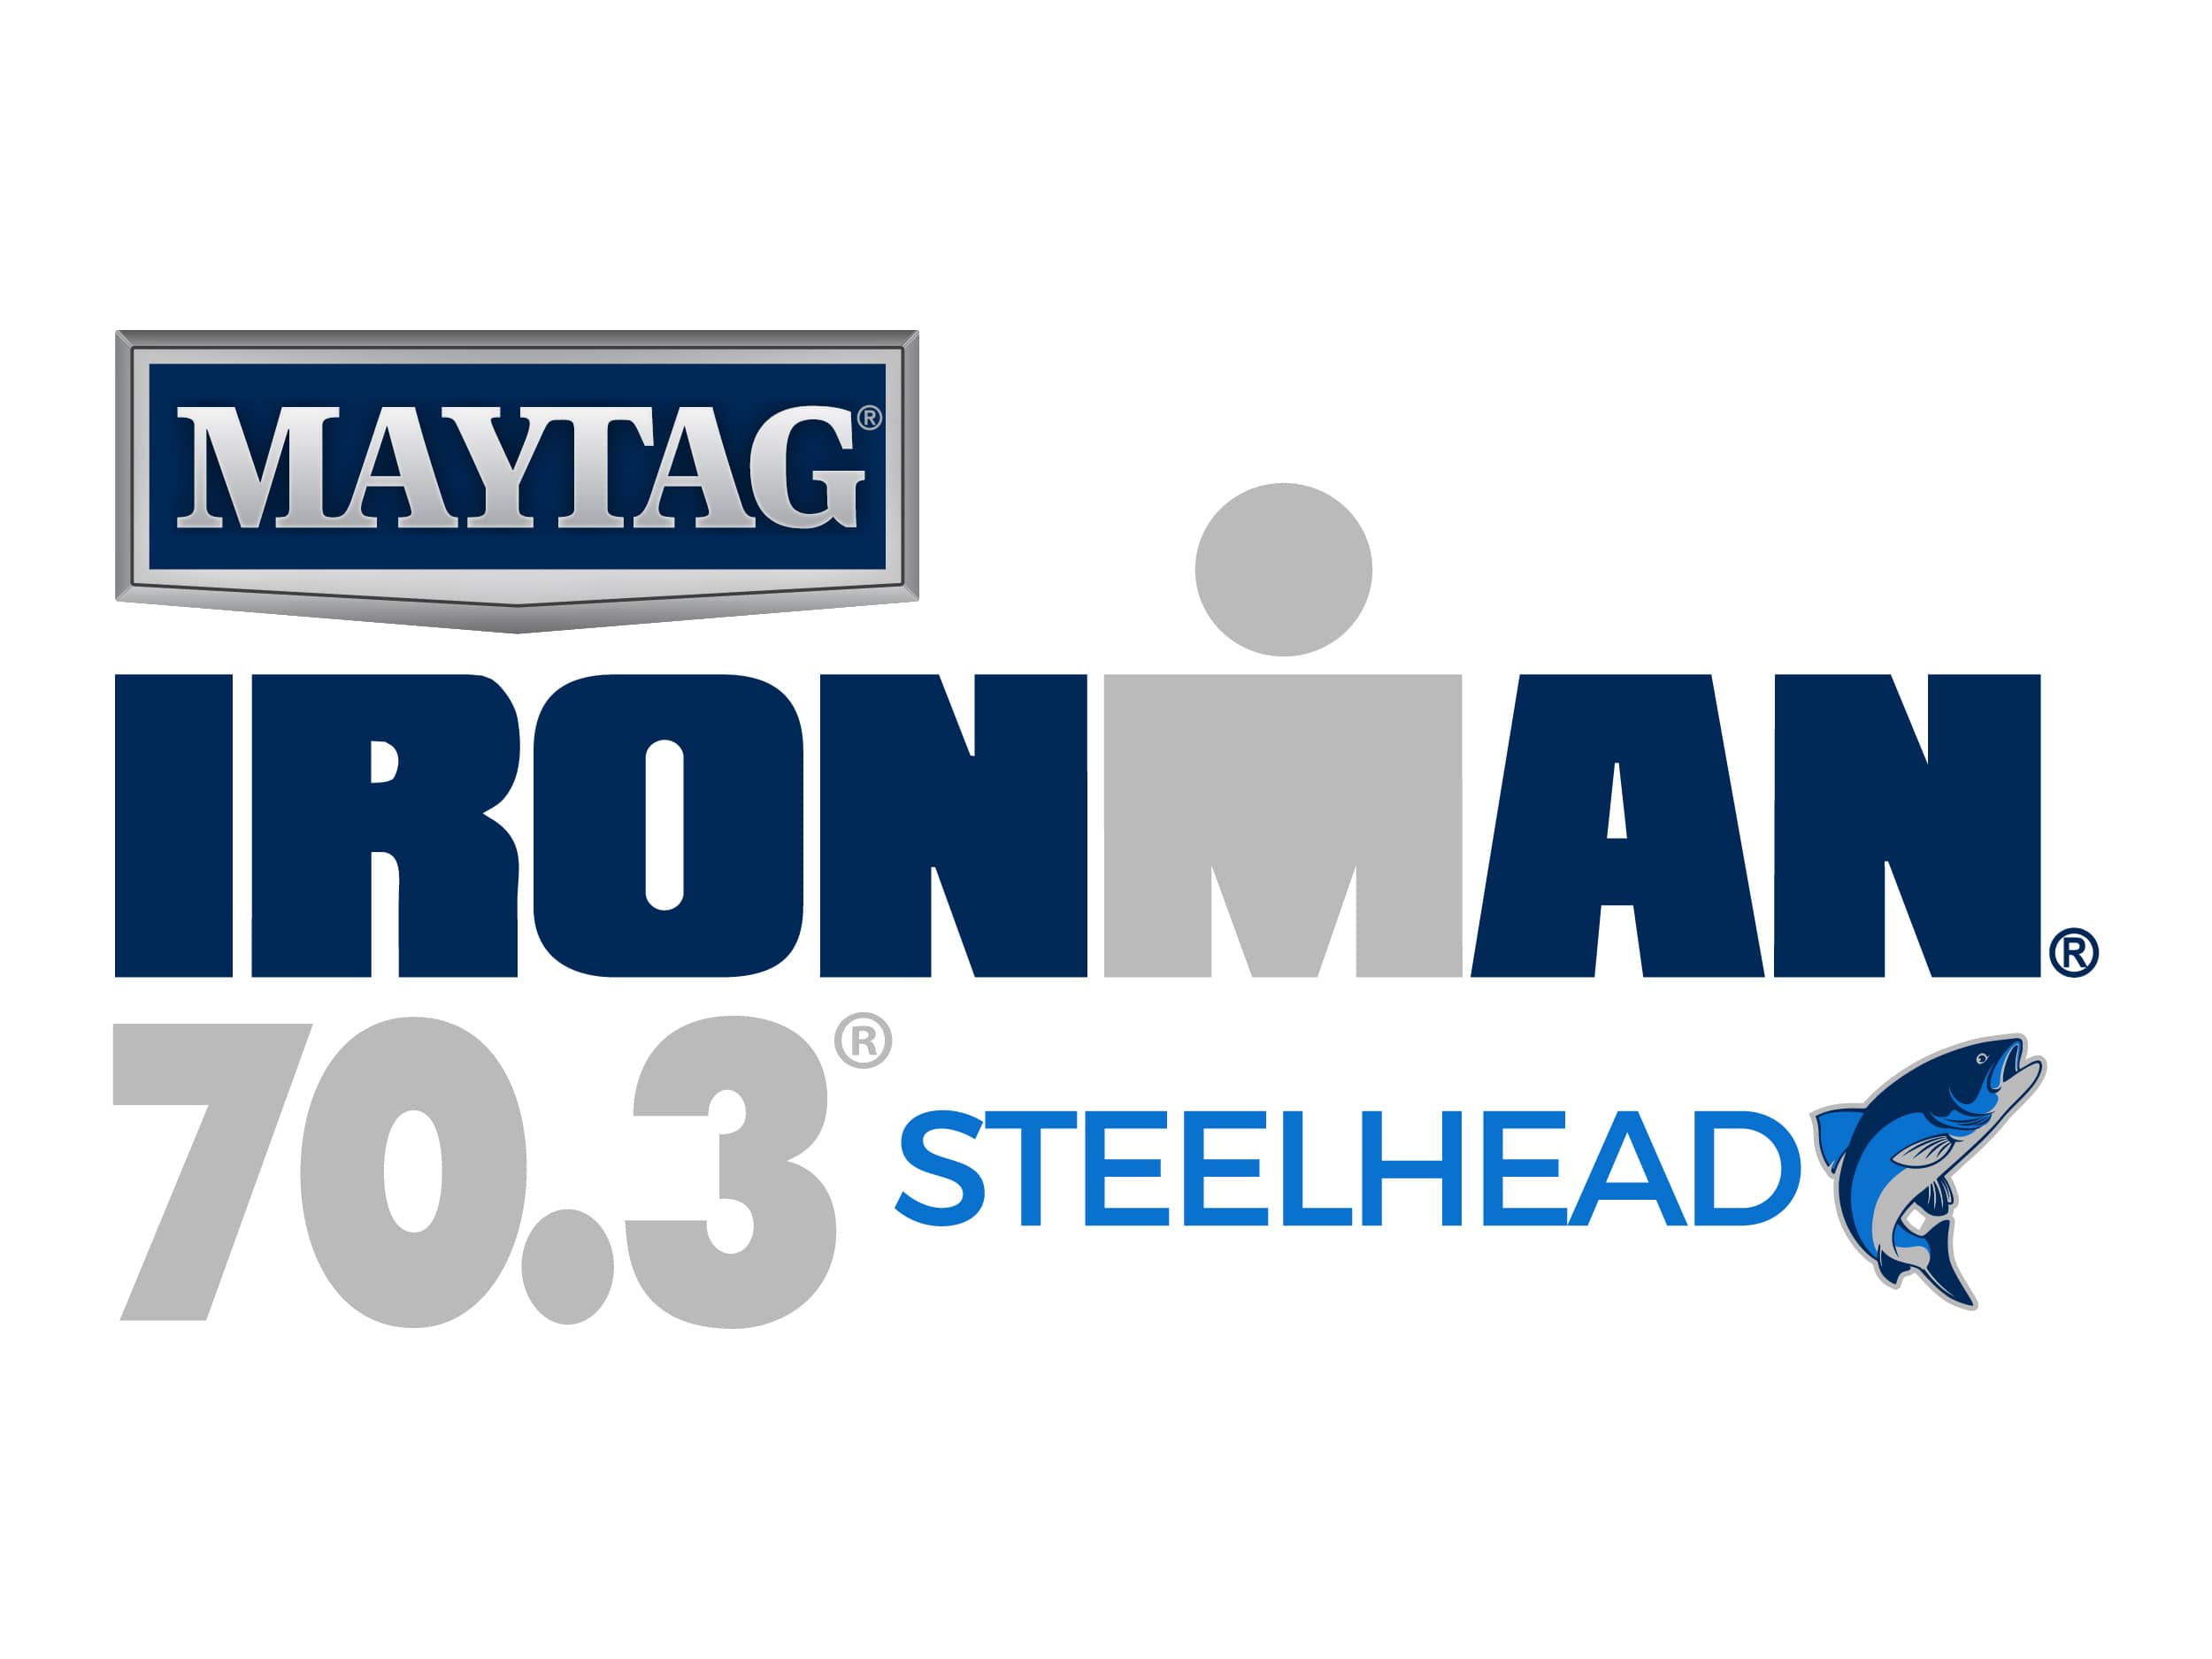 Maytag IRONMAN 70.3 Steelhead Still Needs Volunteers Moody on the Market